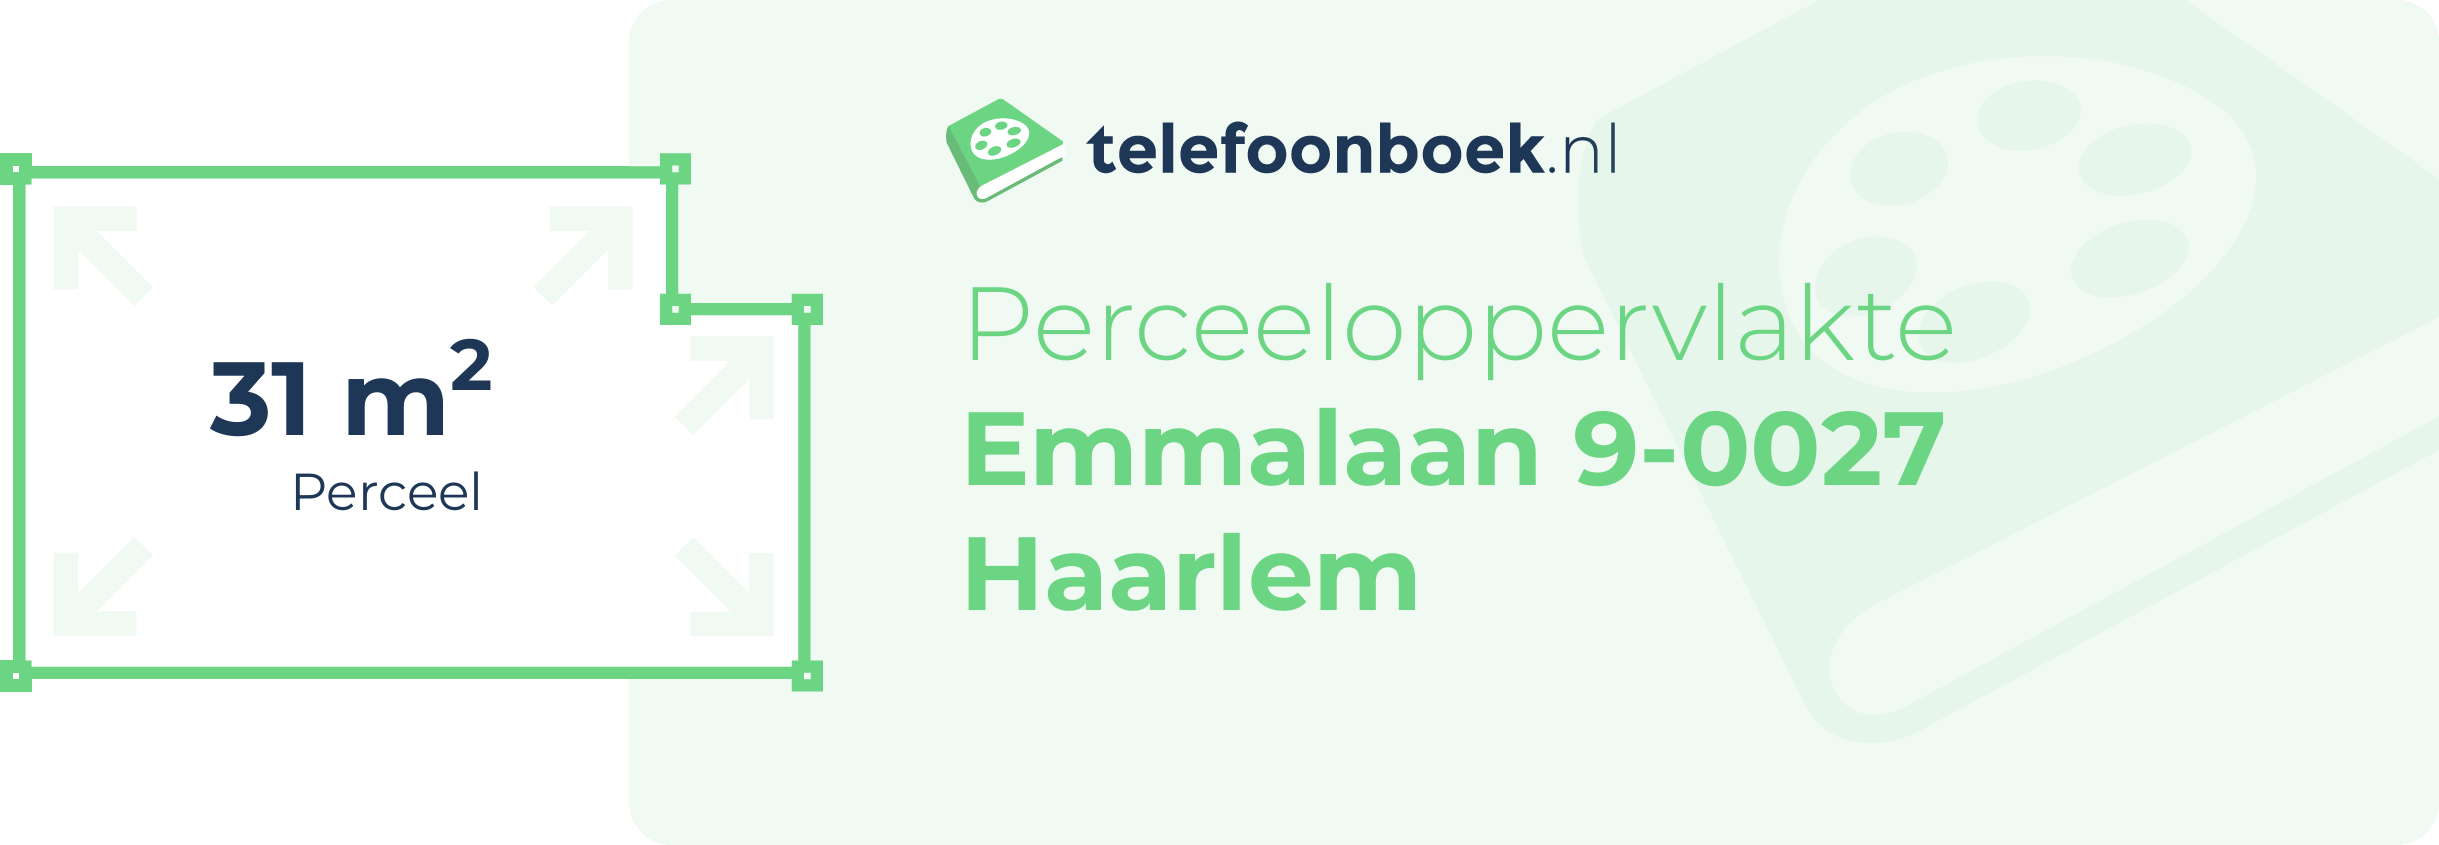 Perceeloppervlakte Emmalaan 9-0027 Haarlem